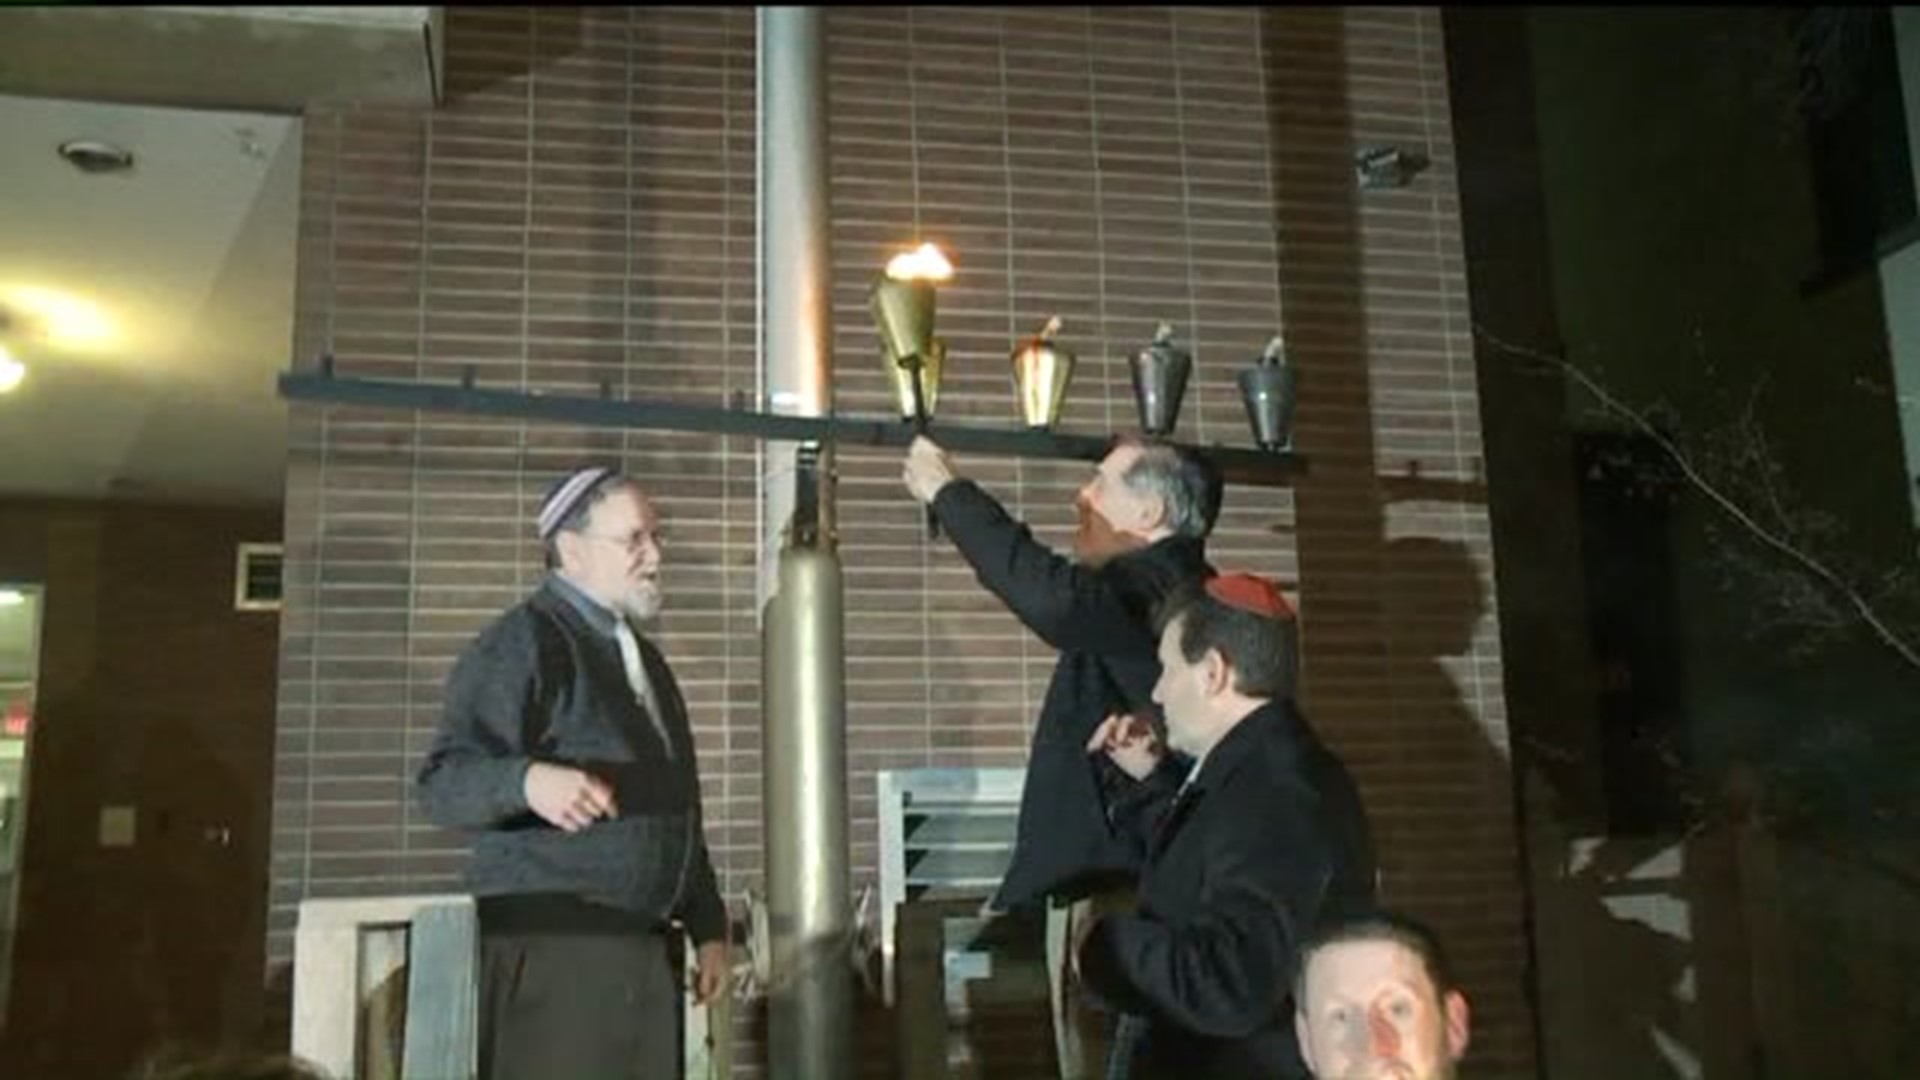 Jewish Community Center in Wilkes-Barre Celebrates Hanukkah